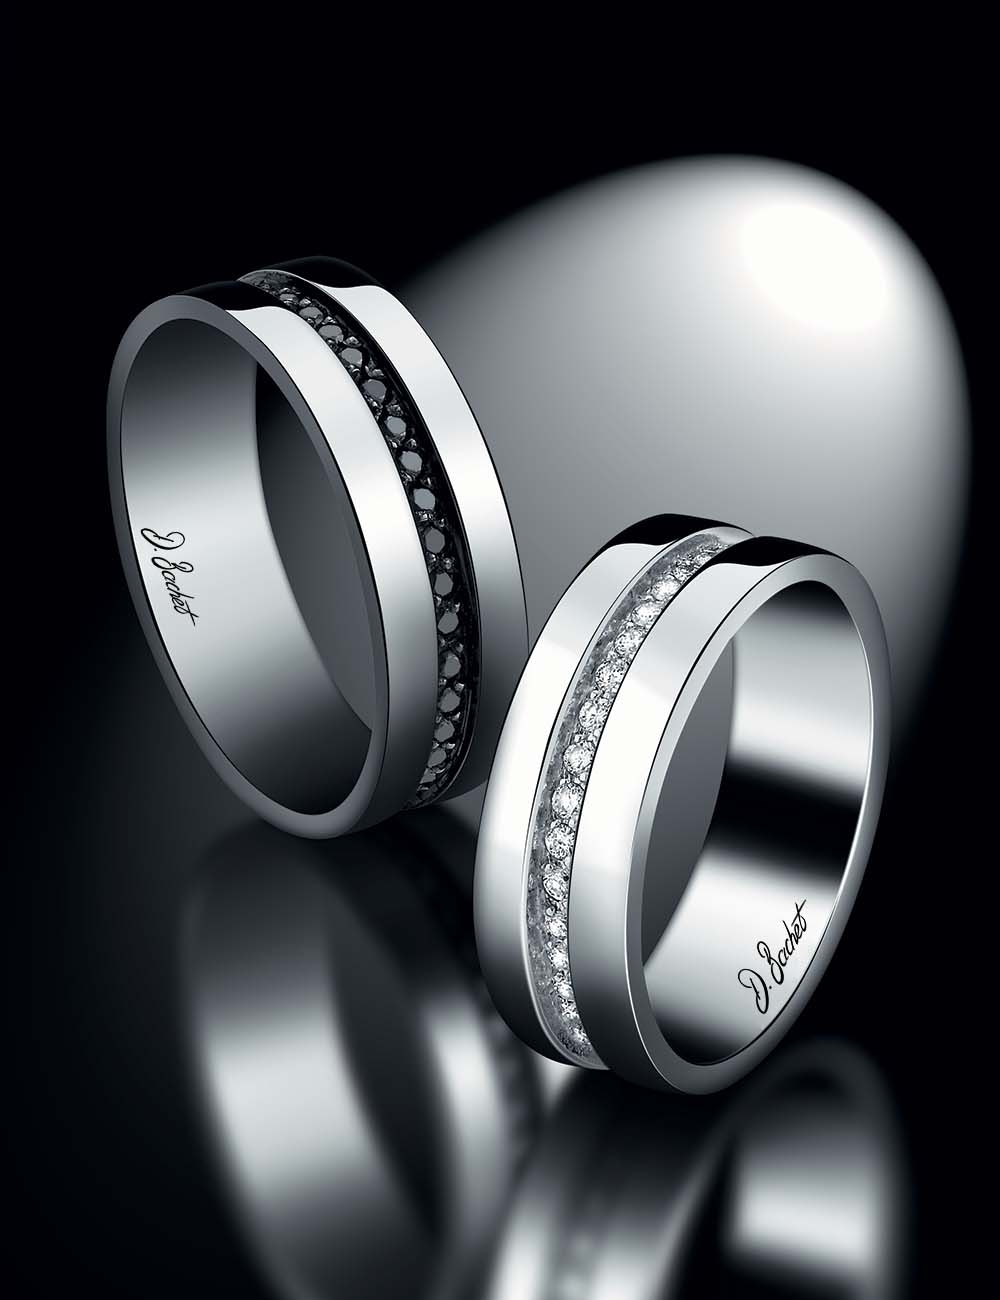 6mm women's wedding band in platinum with white diamonds, elegant modern style, also in black diamonds.